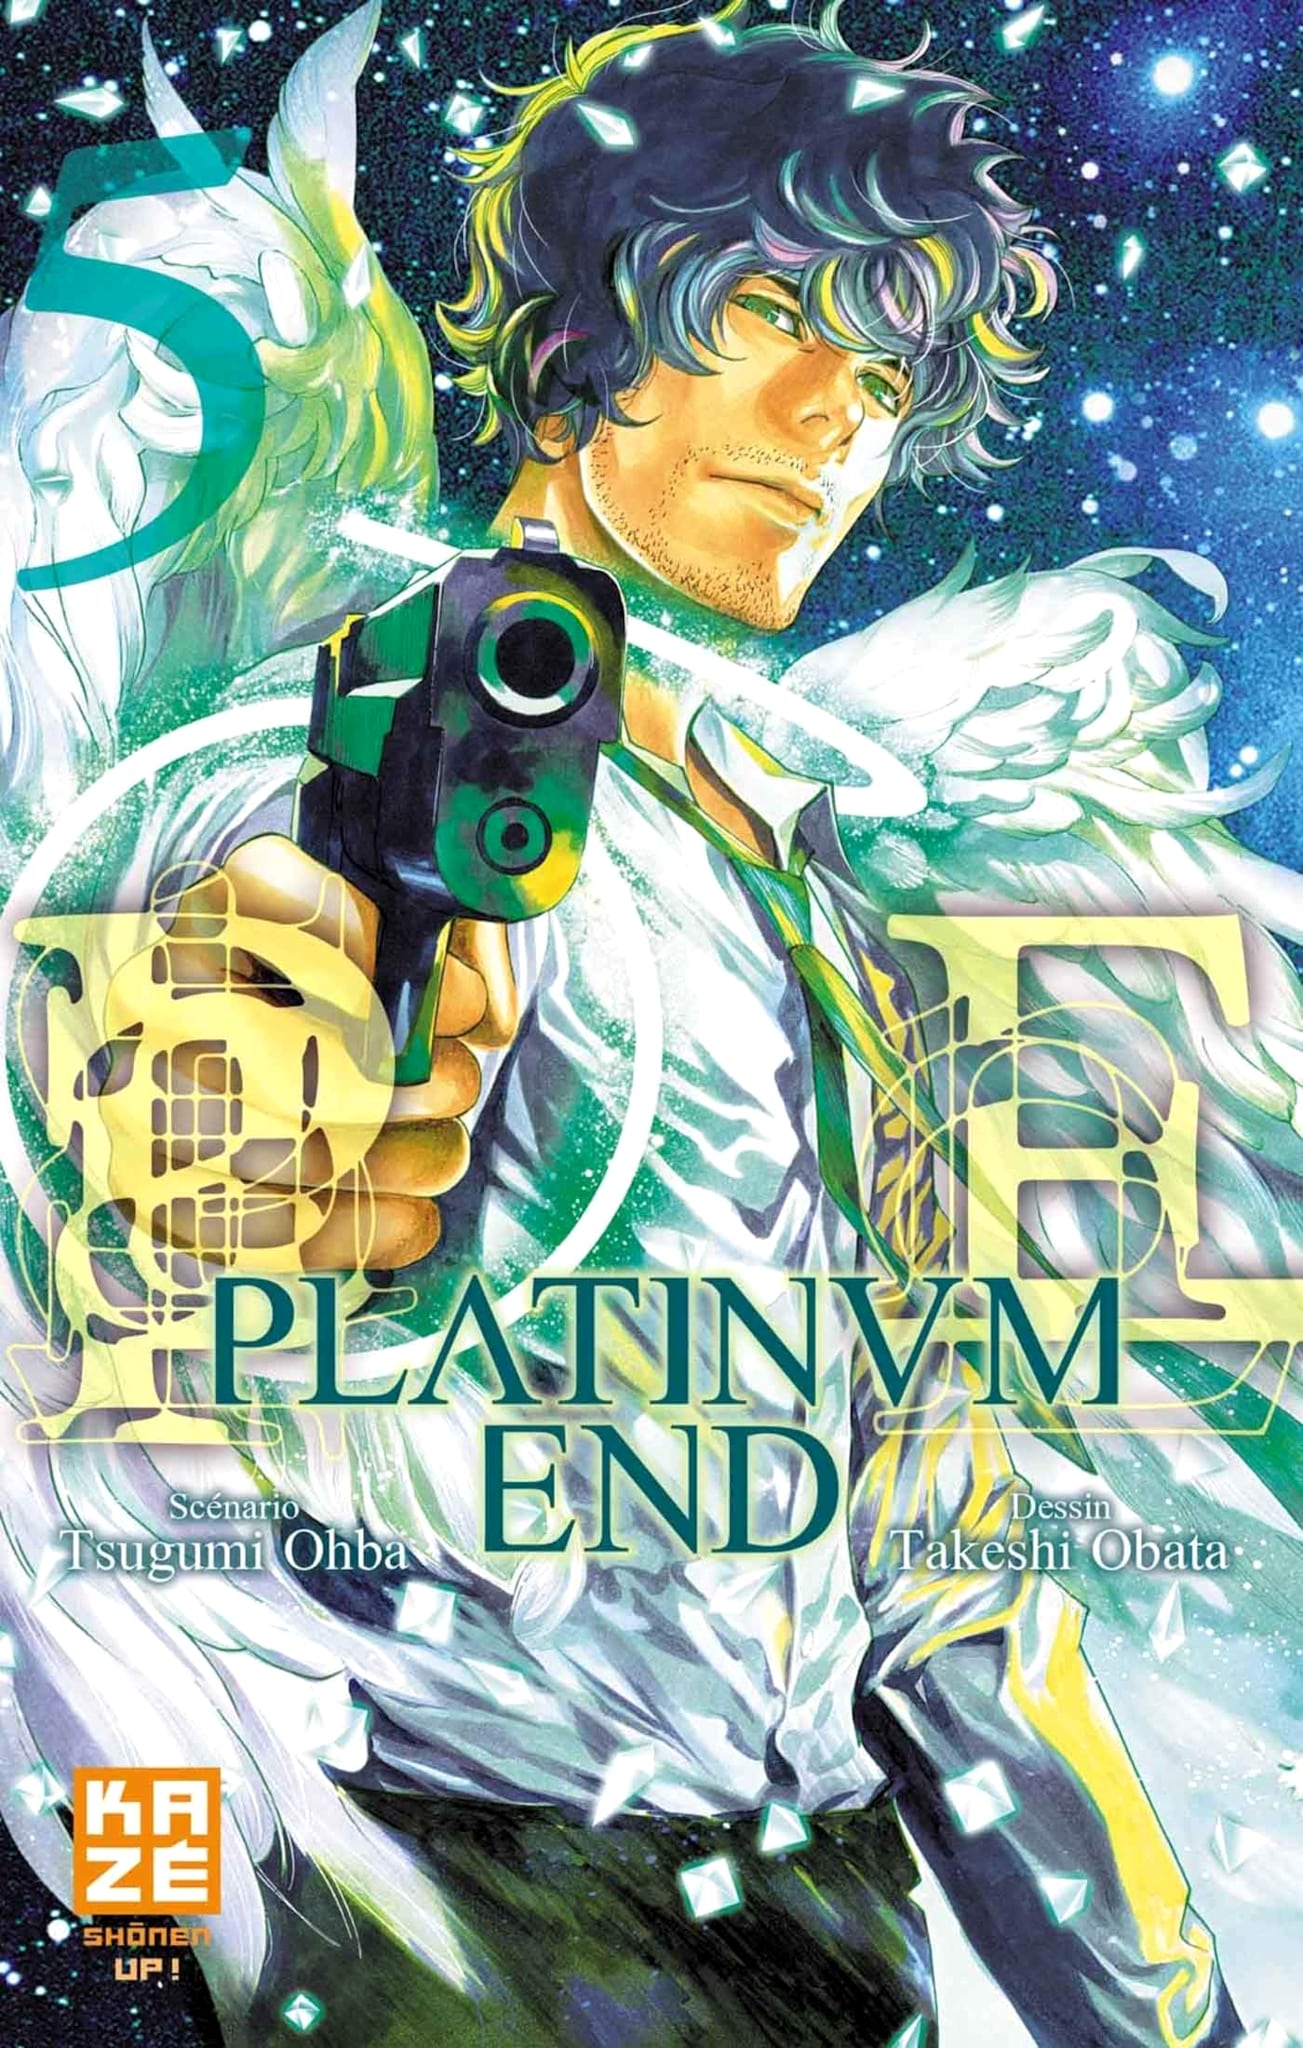 Tome 5 du manga Platinum End